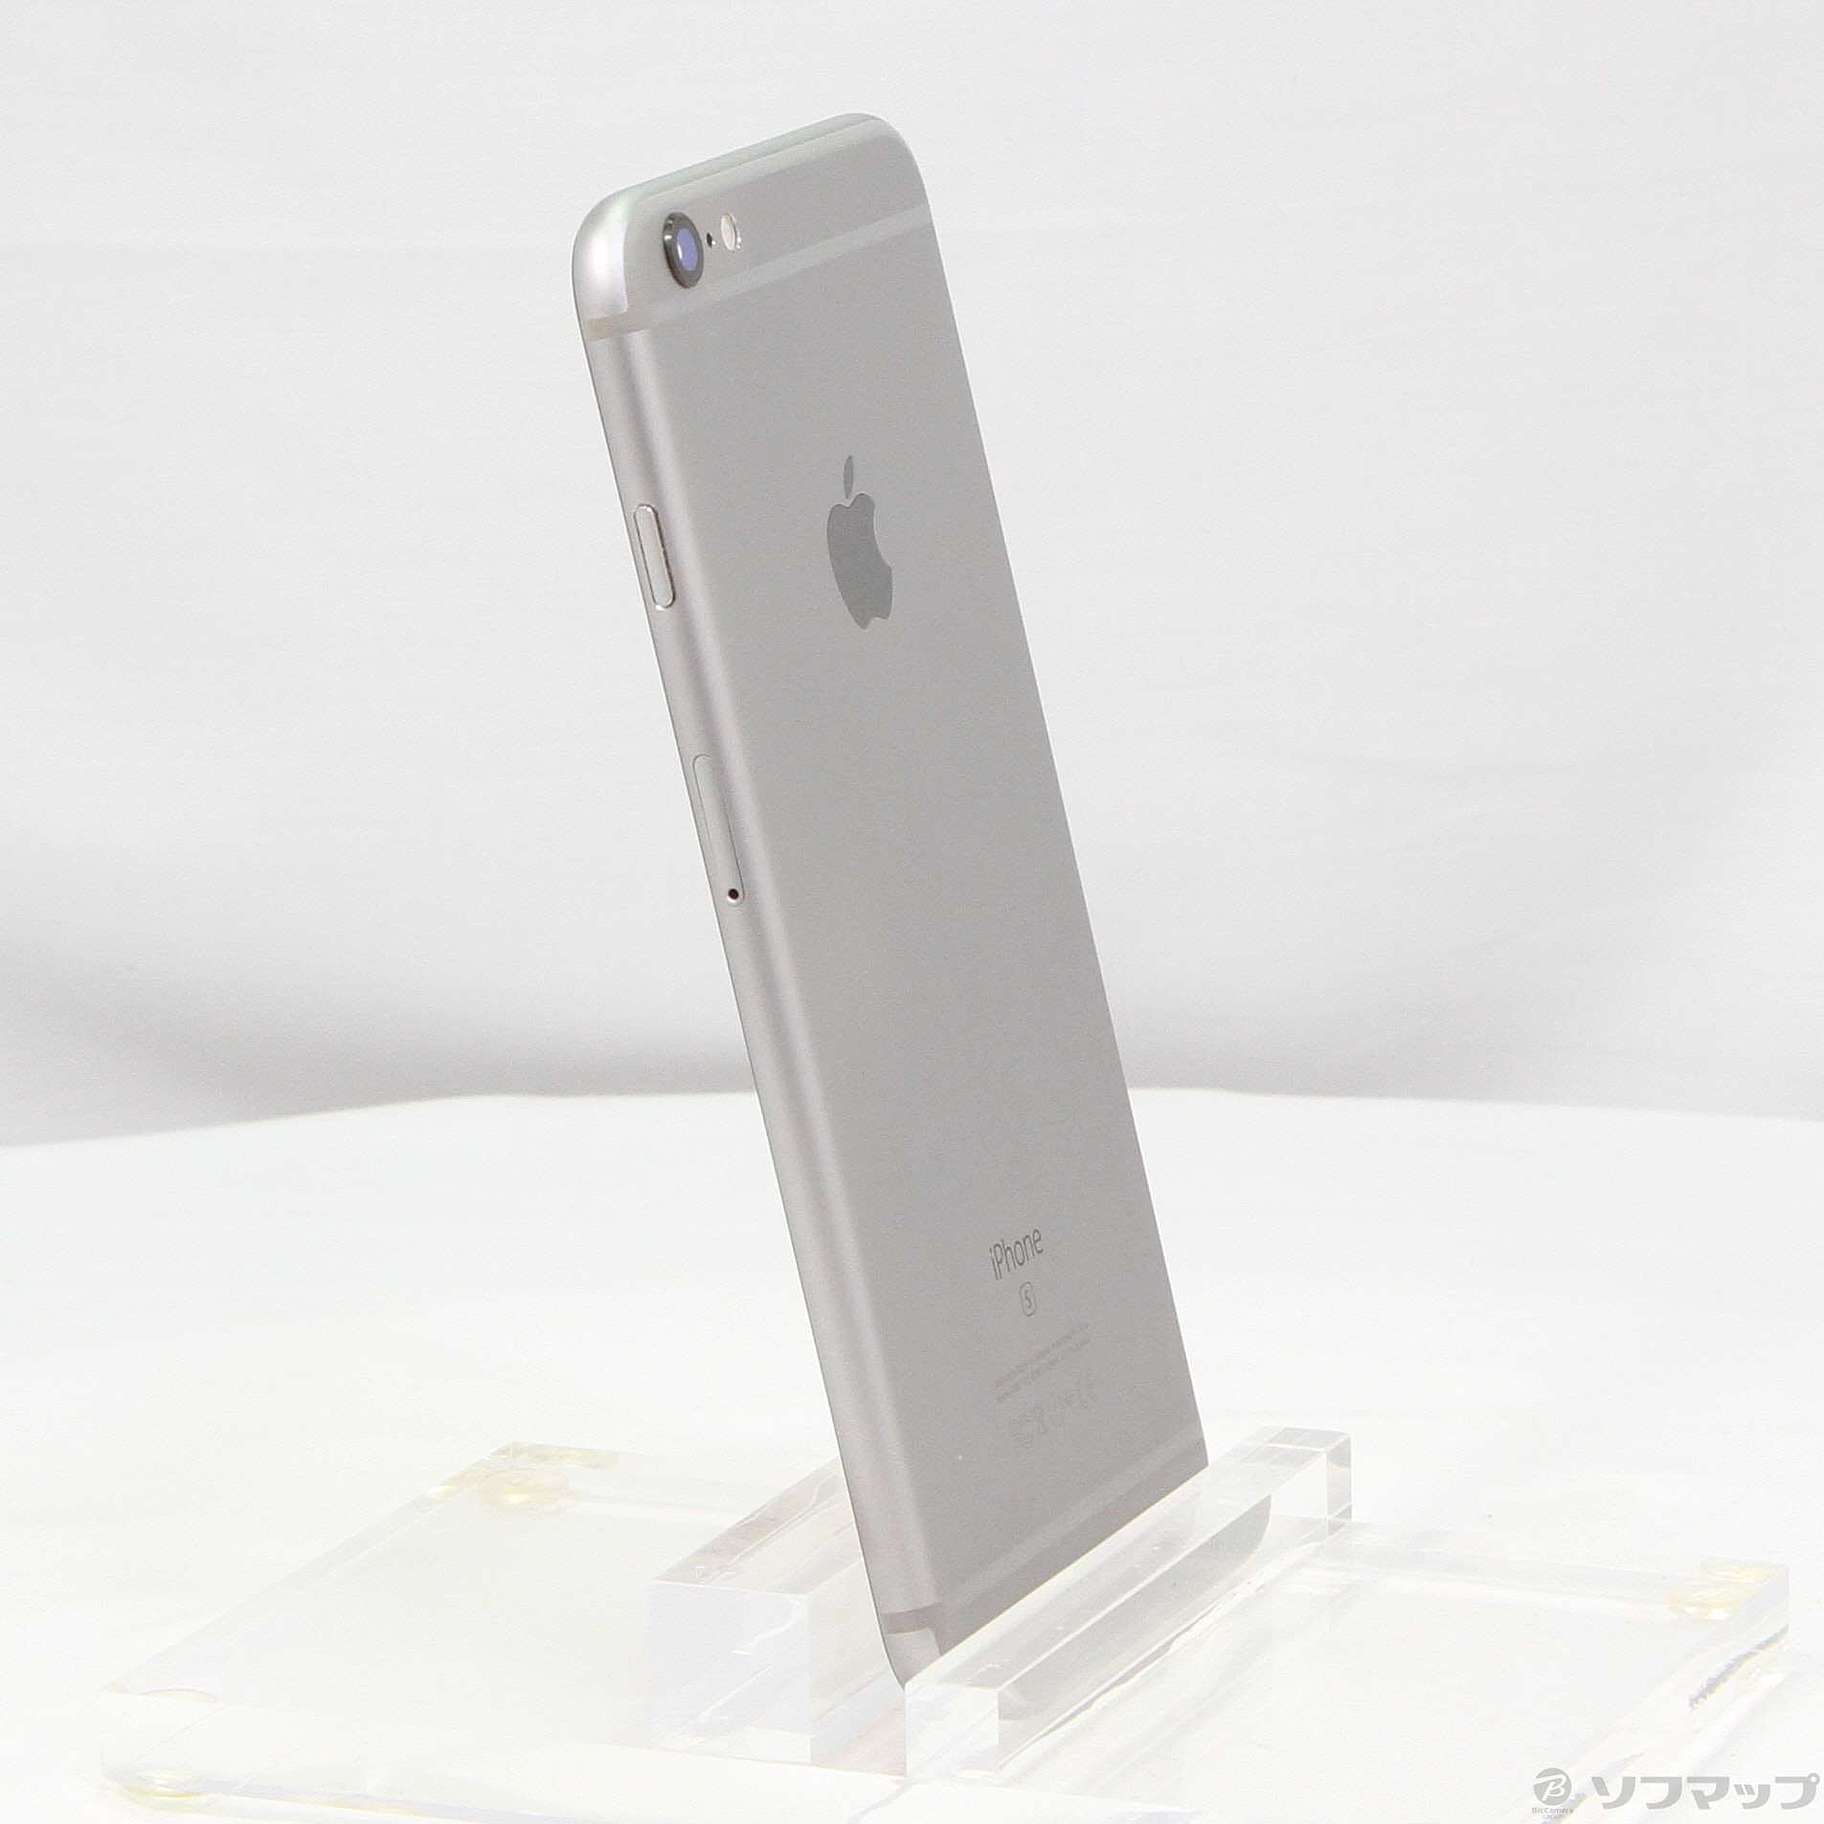 Apple iPhone 6s Plus 128GB Space Gray